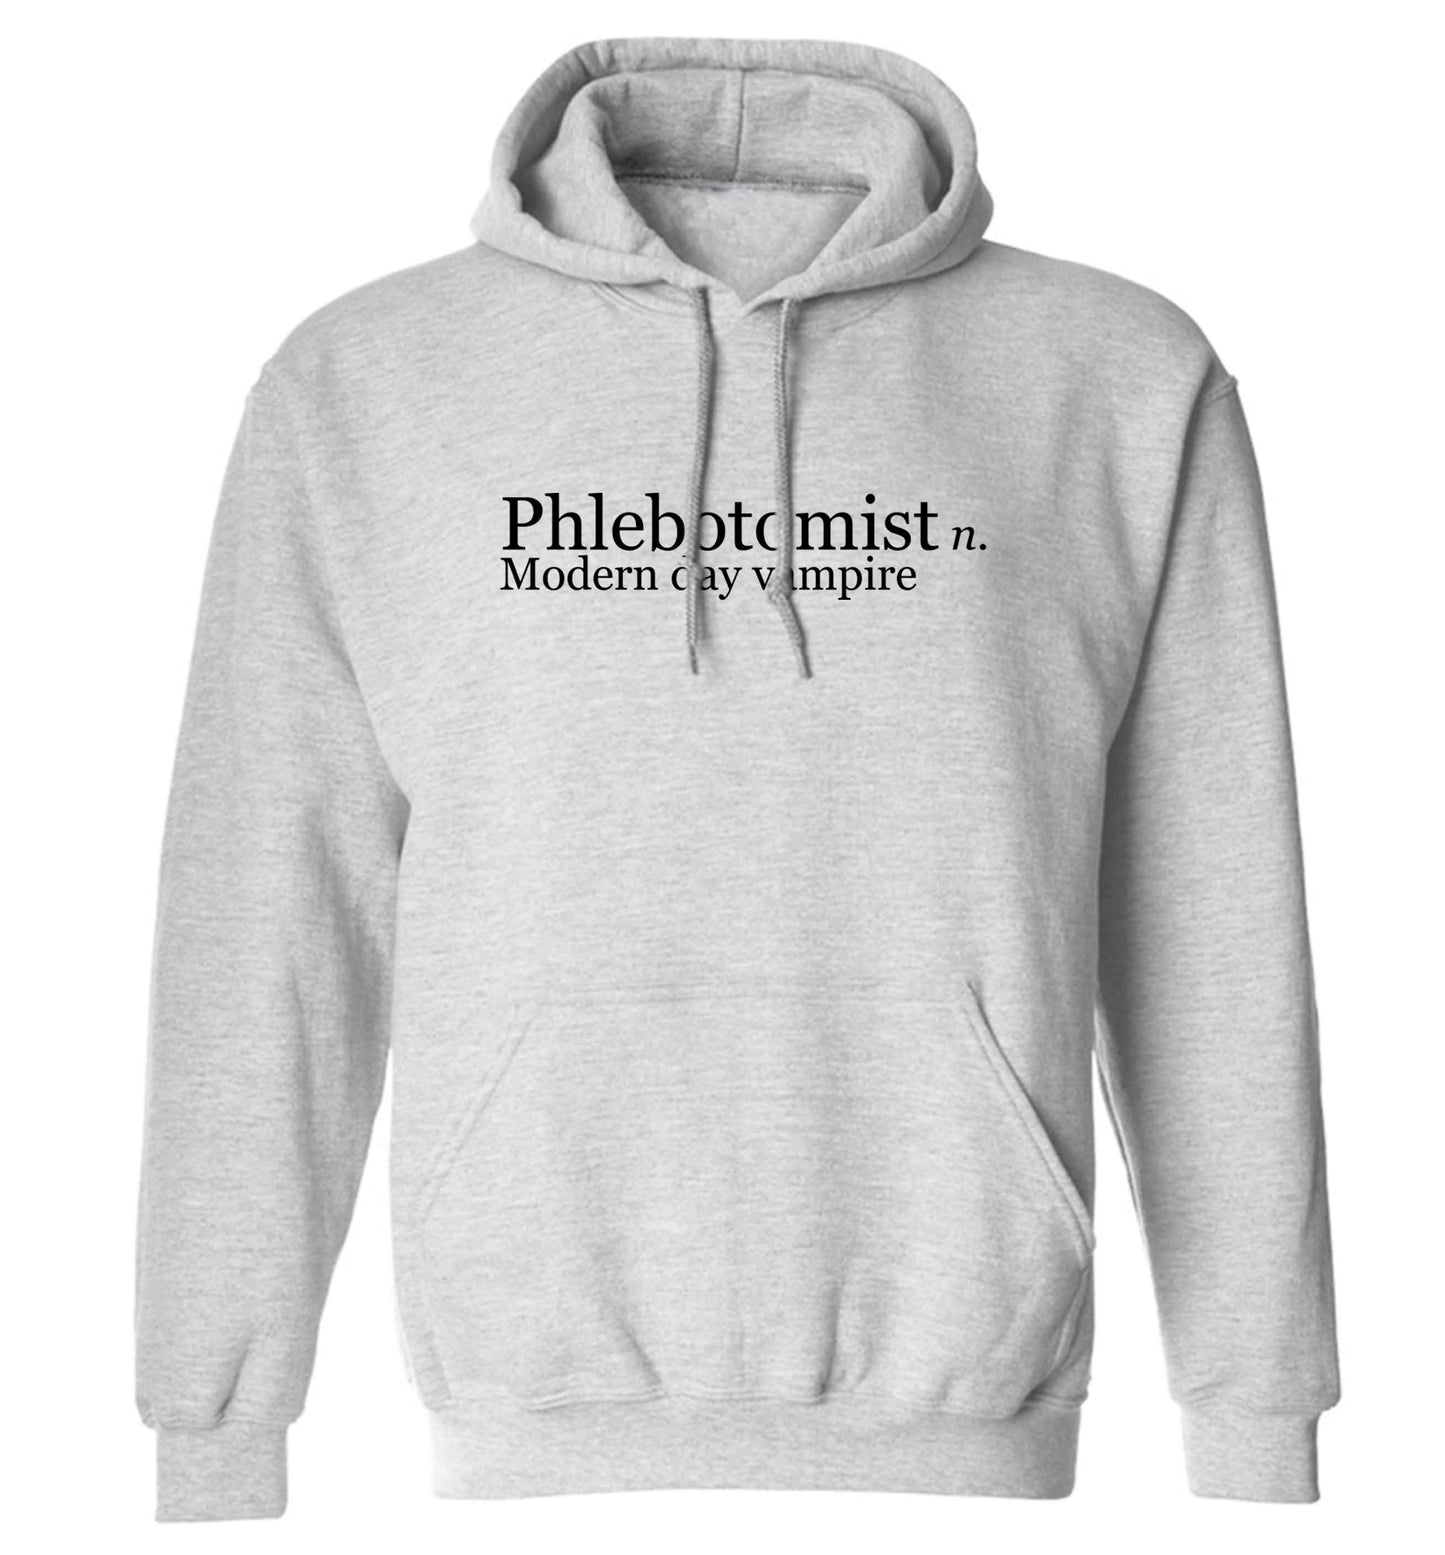 Phlebotomist - Modern day vampire adults unisex grey hoodie 2XL